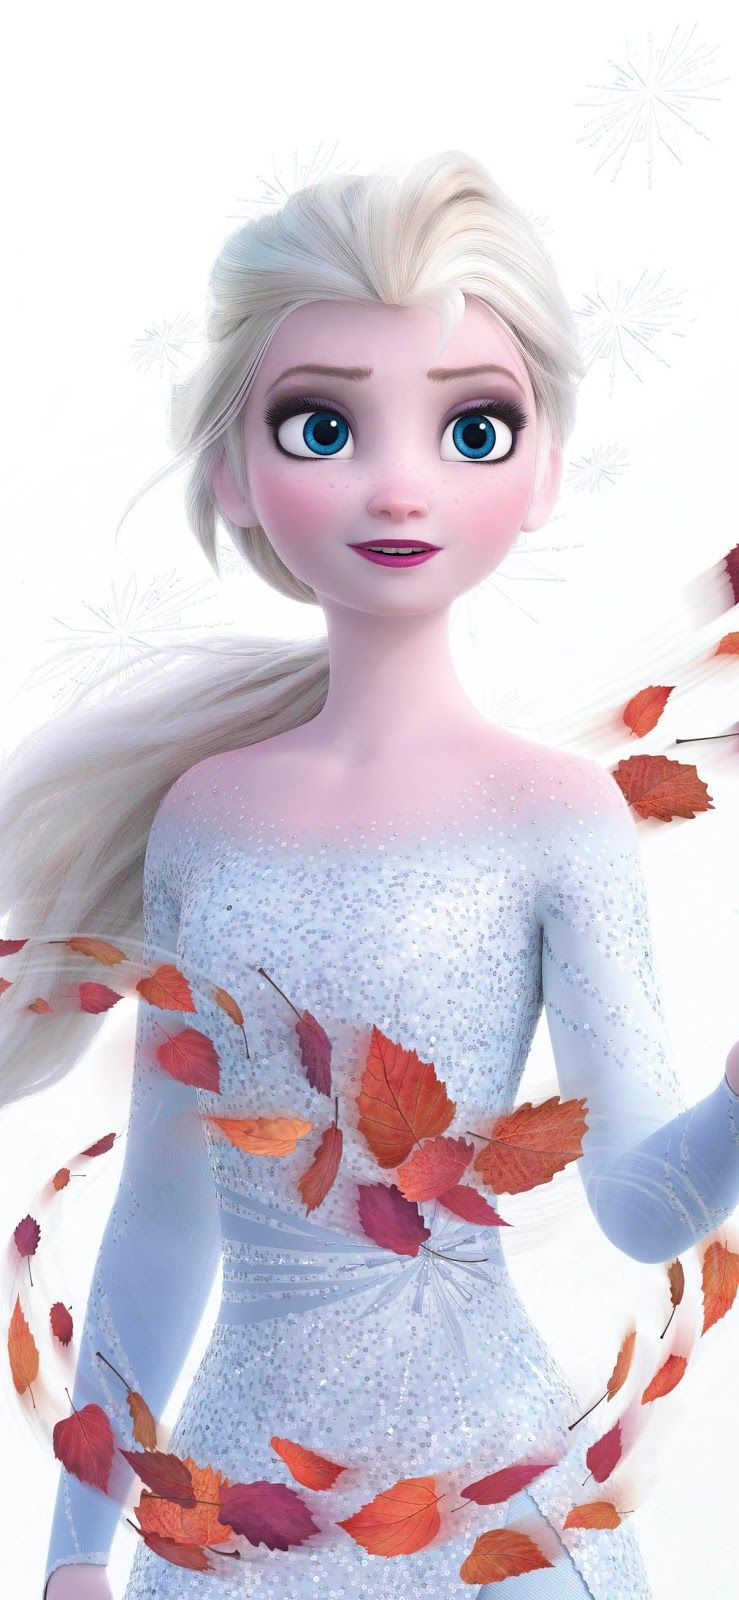 My Favorite Pics, Frozen 2 mobile wallpaper. Disney frozen elsa art, Disney princess elsa, Disney frozen elsa